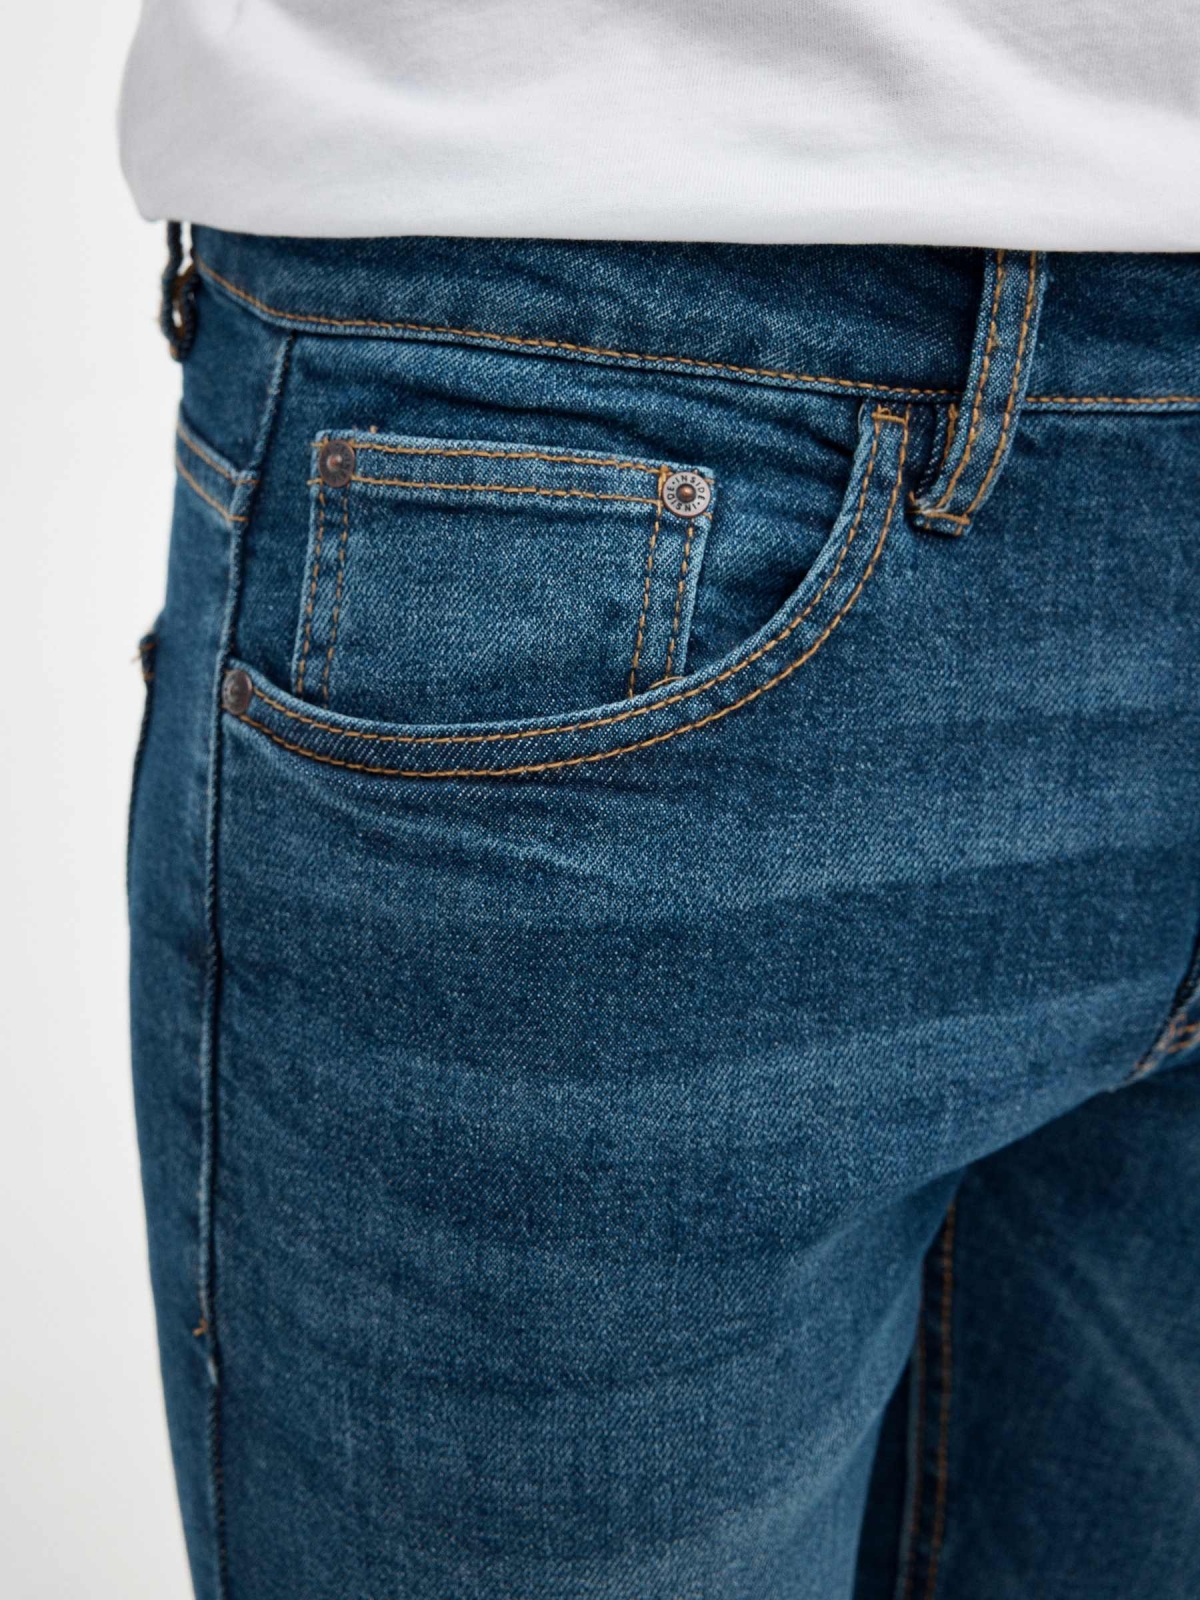 Regular denim jeans blue foreground